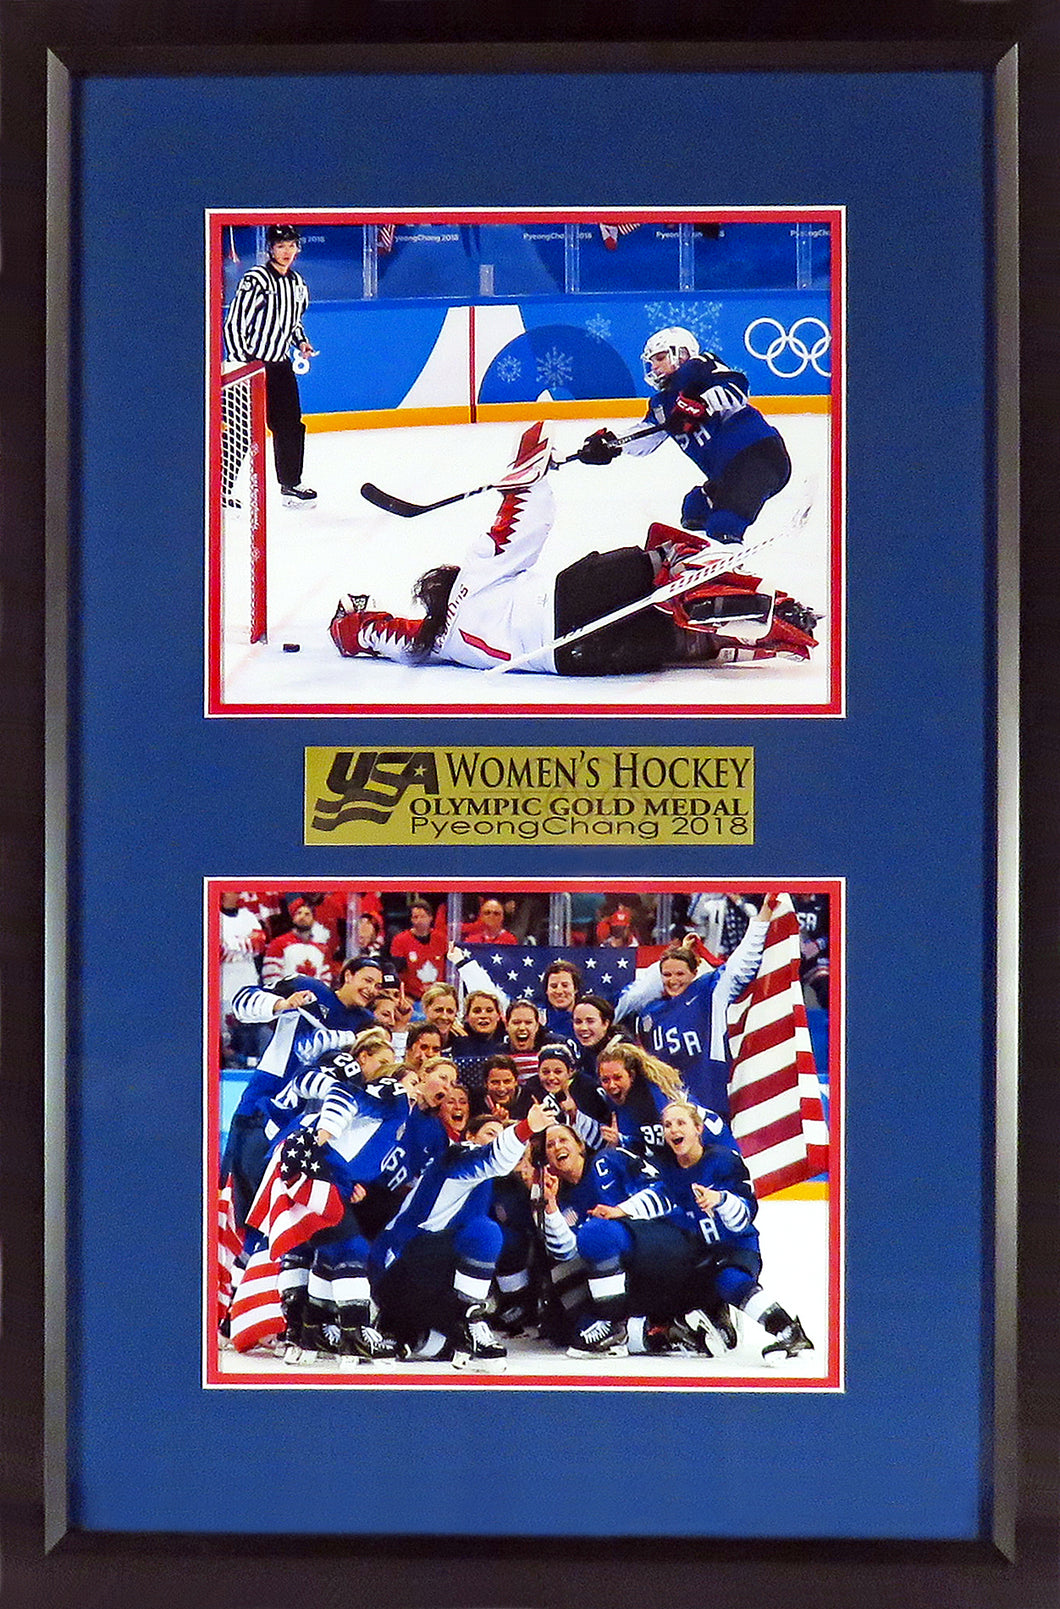 USA Women's Hockey “Olympic Gold Medal